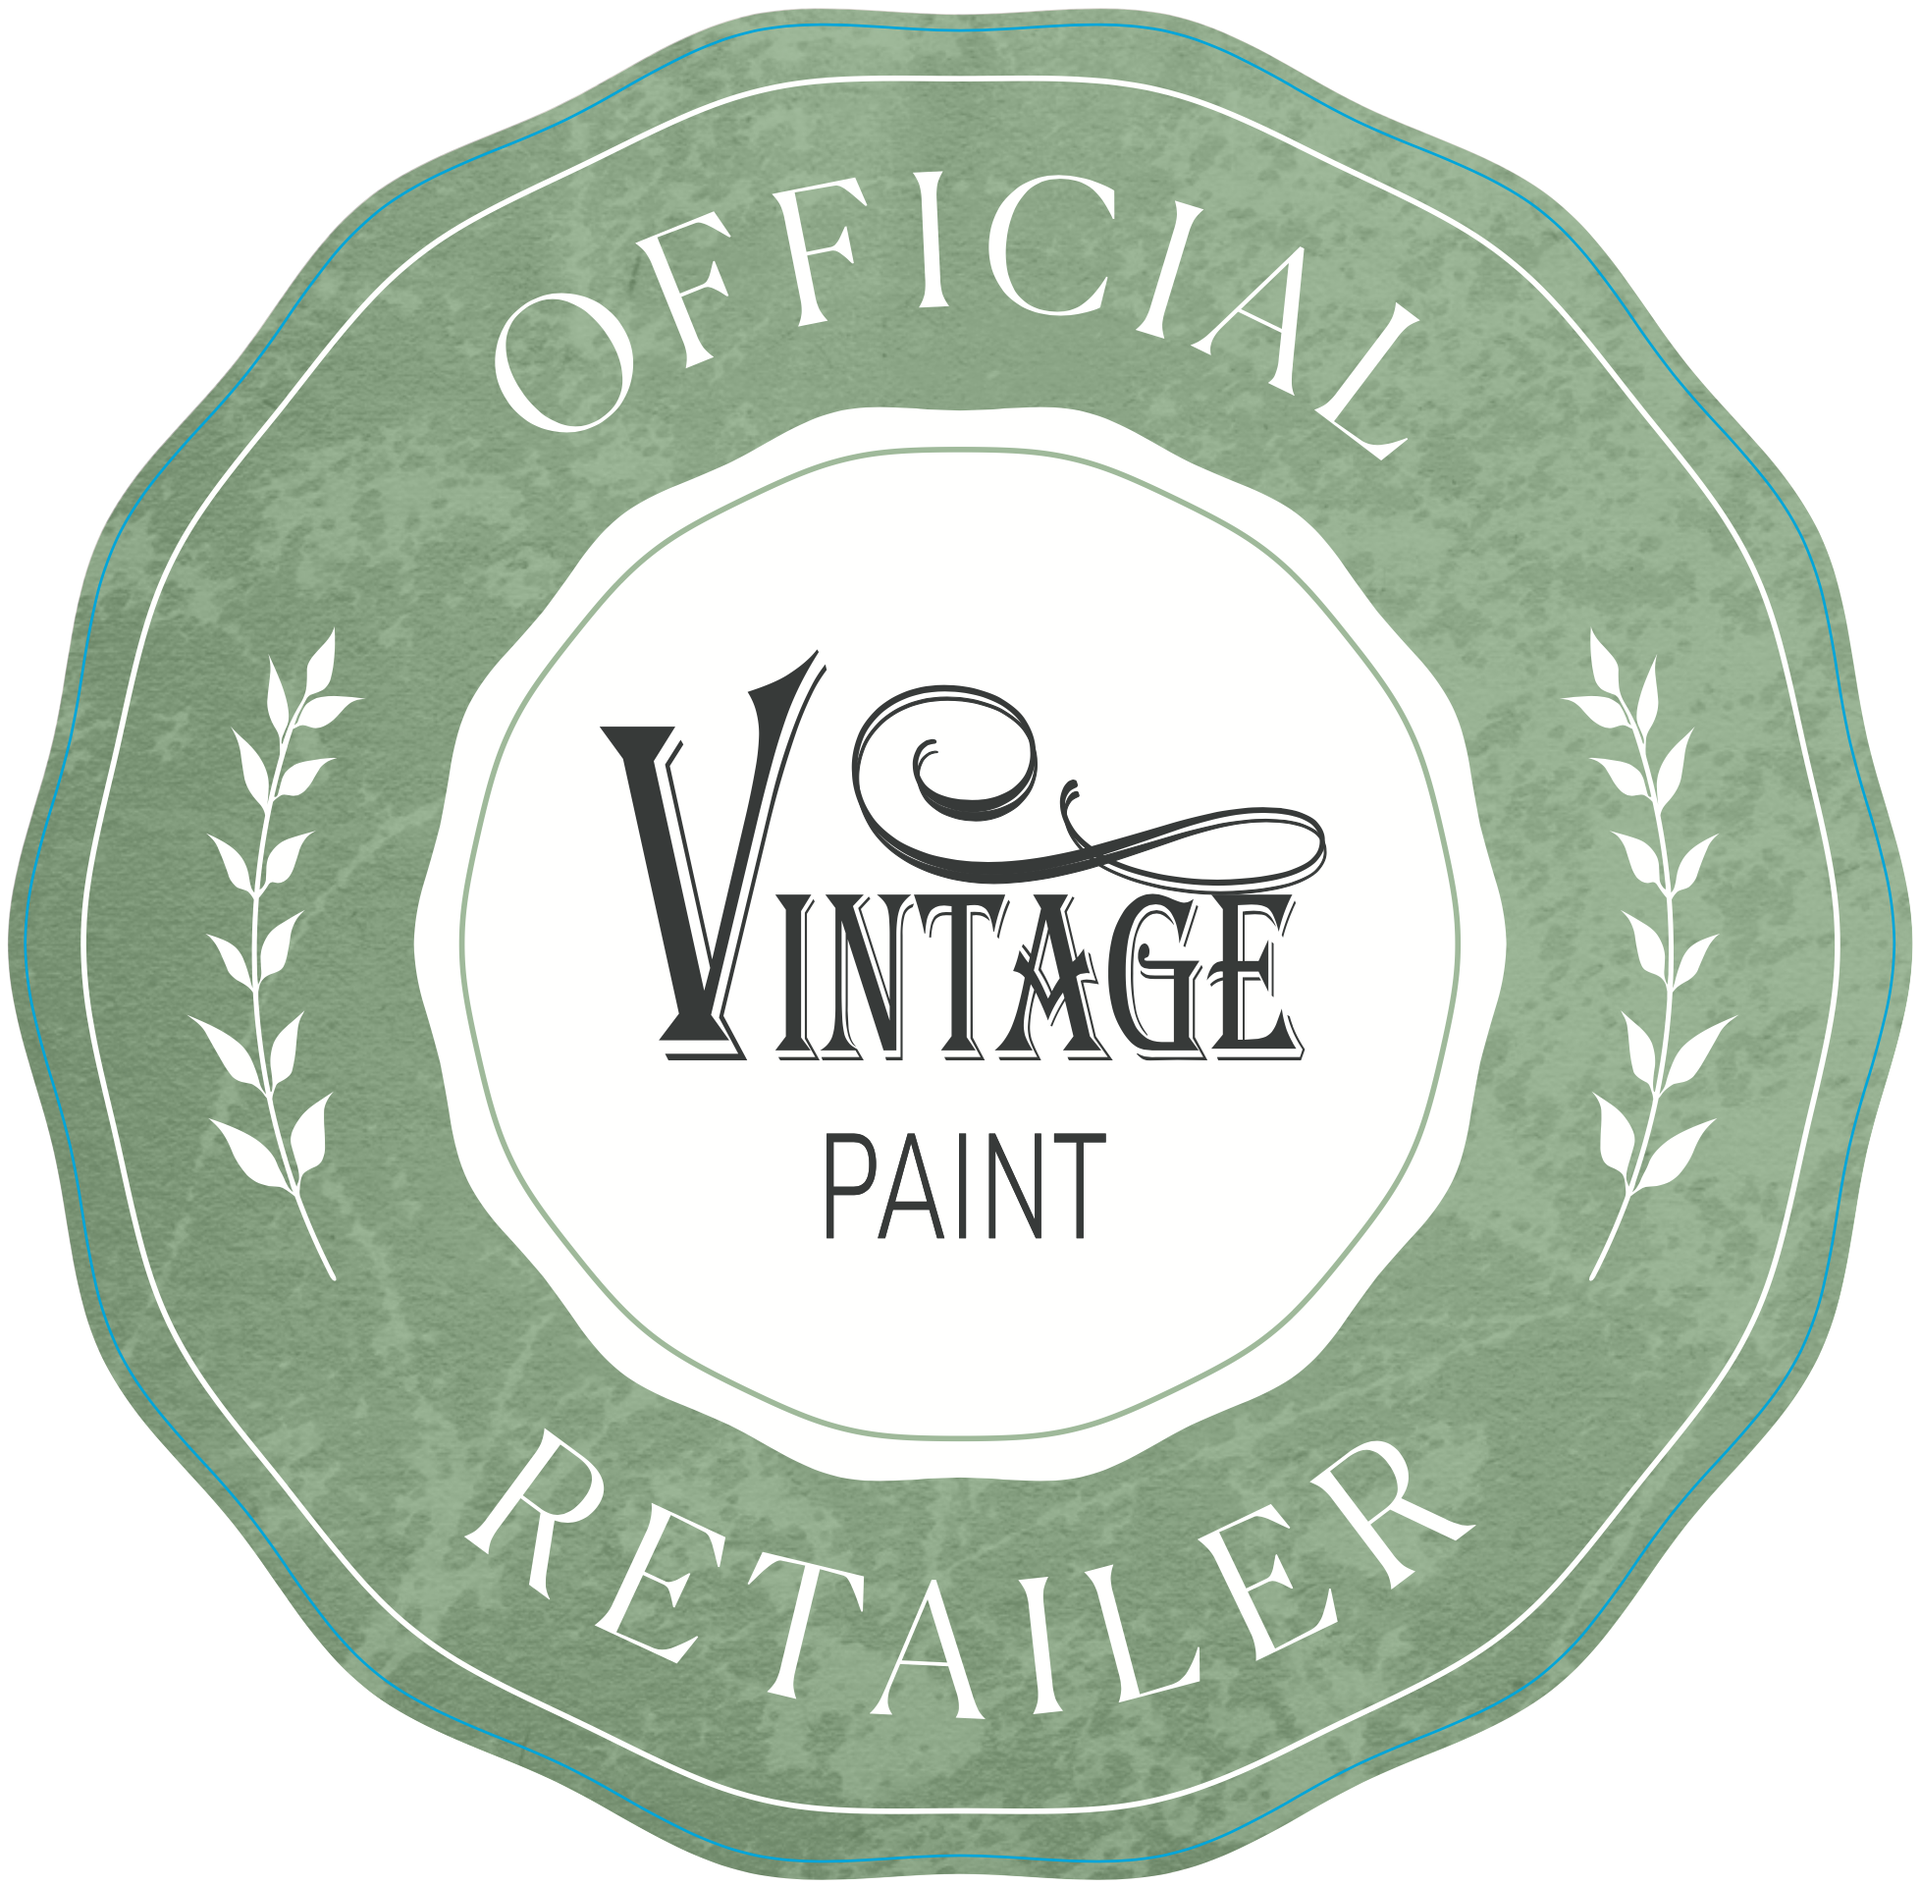 [shop sticker] Retailer double sided window Sticker (1) 25 cm Vintage Paint Green